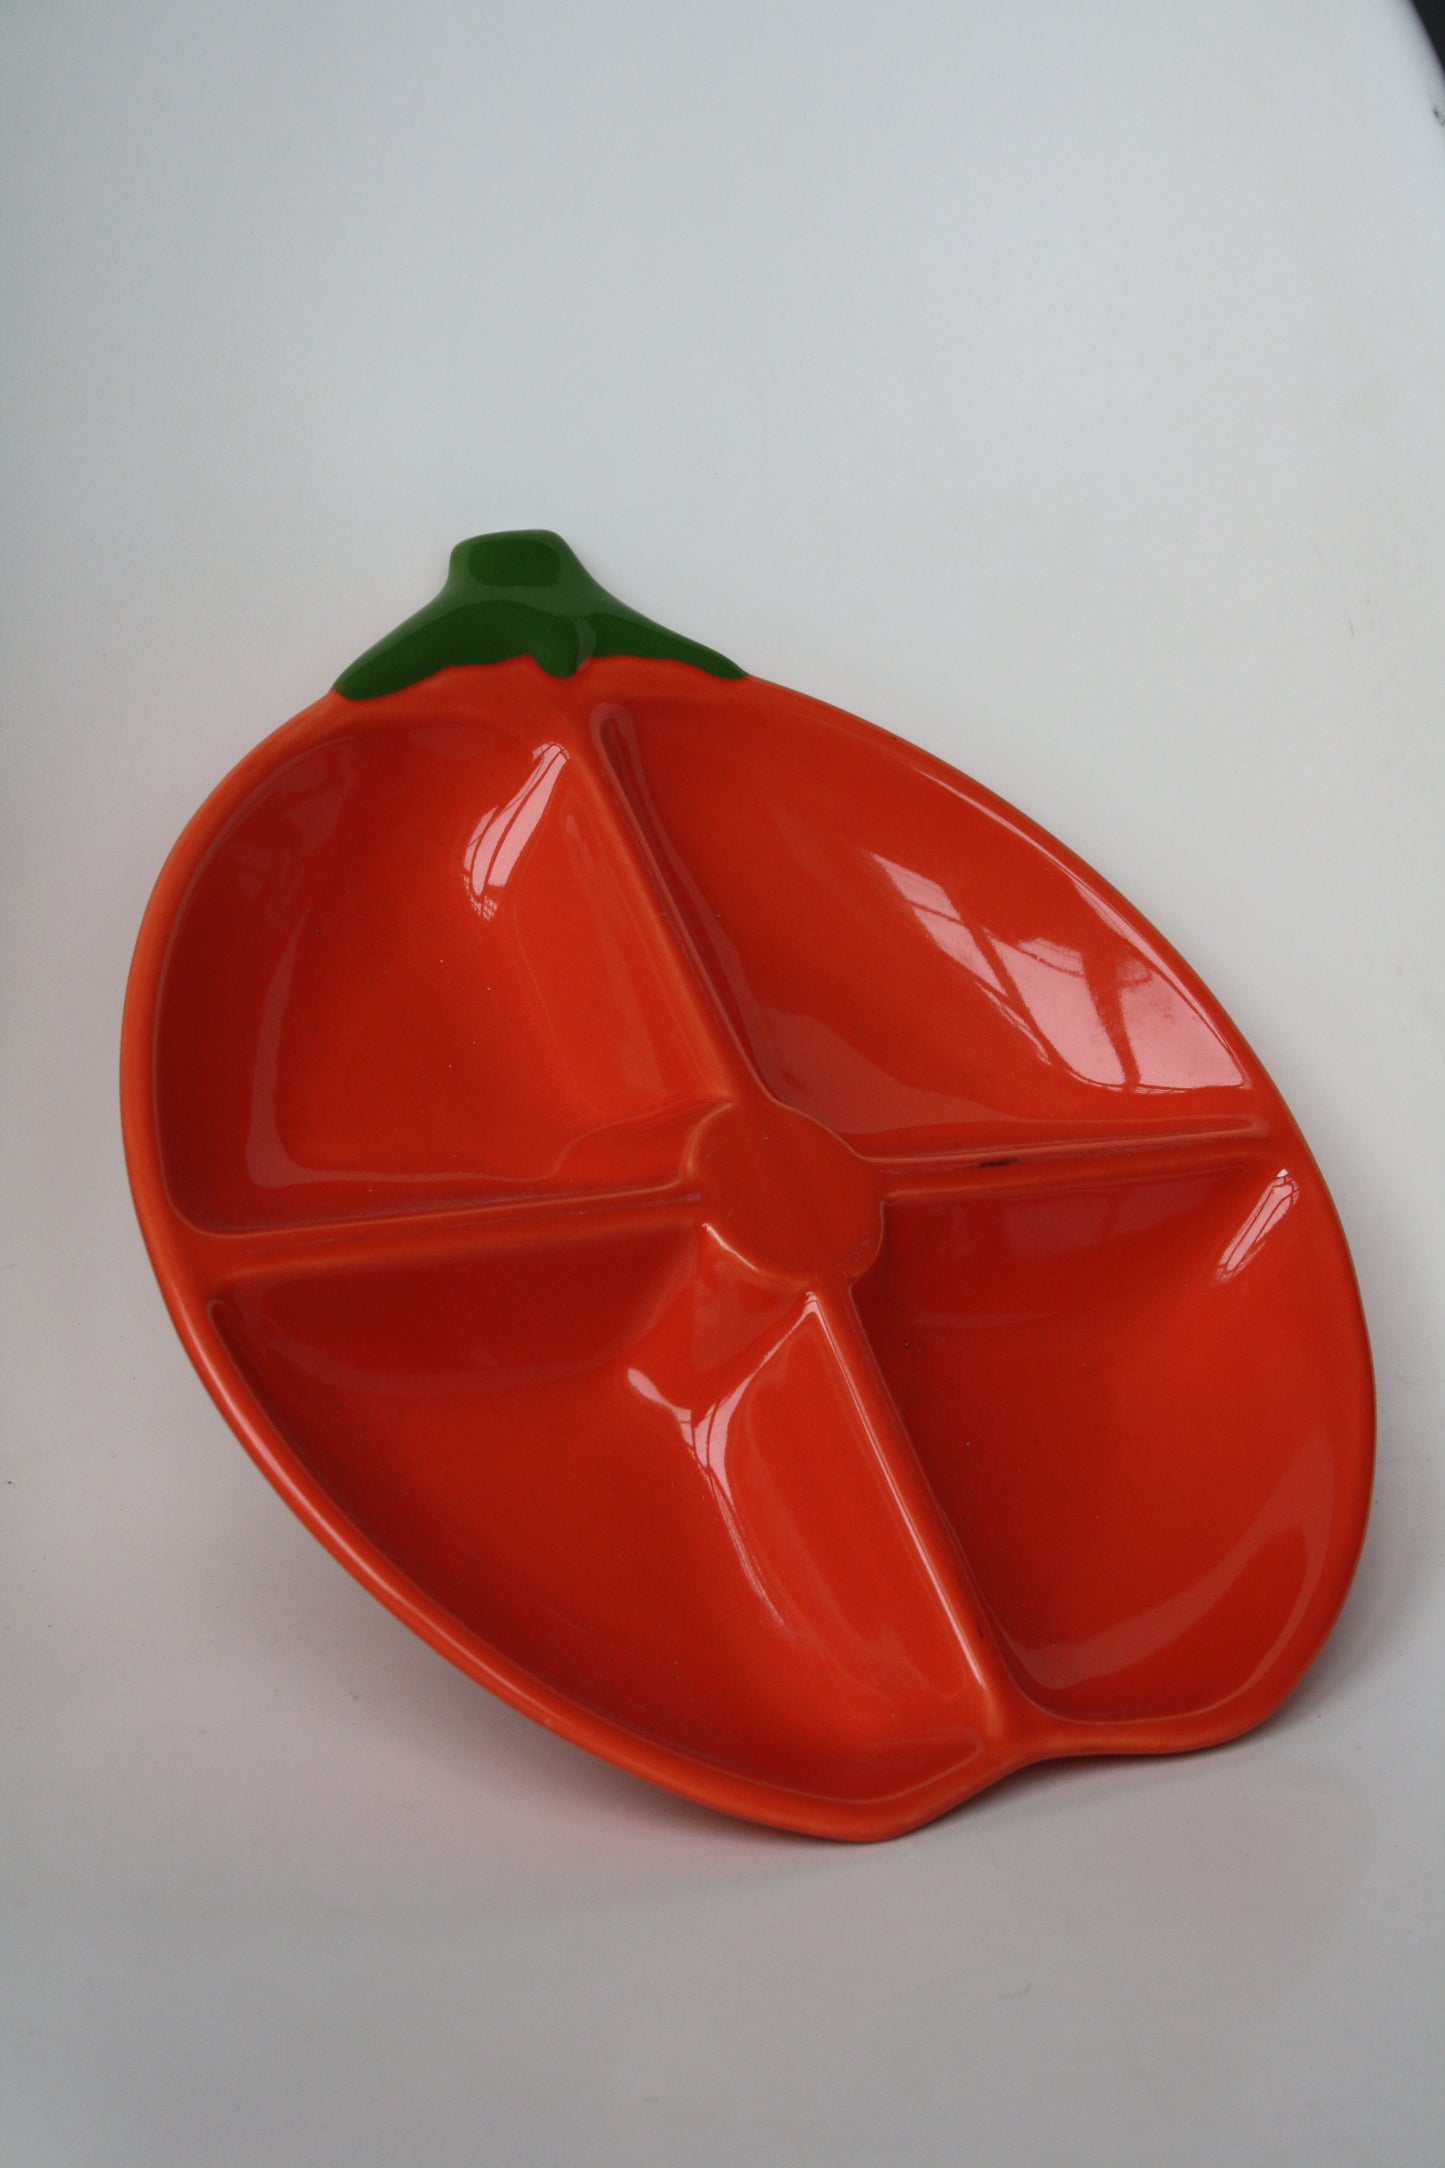 Tomato Serving Plate